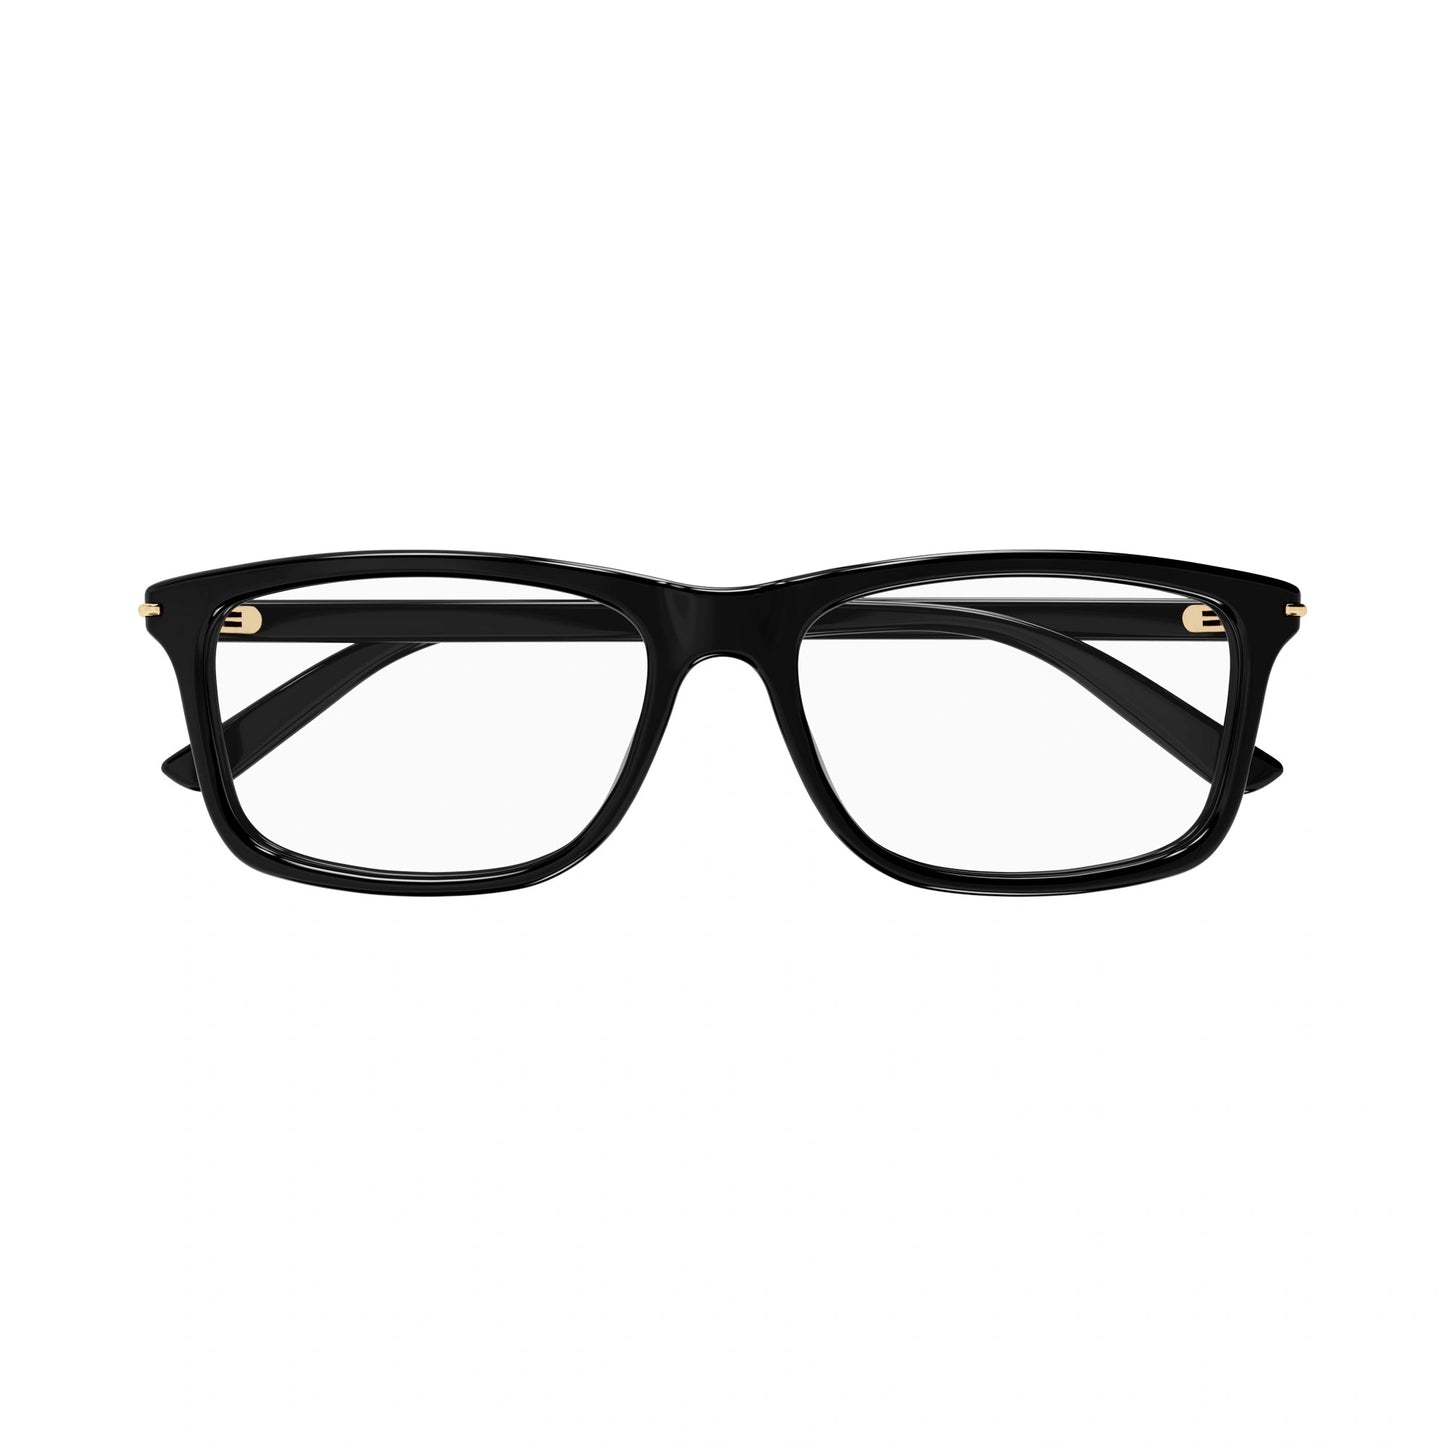 Gucci GG1447o-001 57mm New Eyeglasses